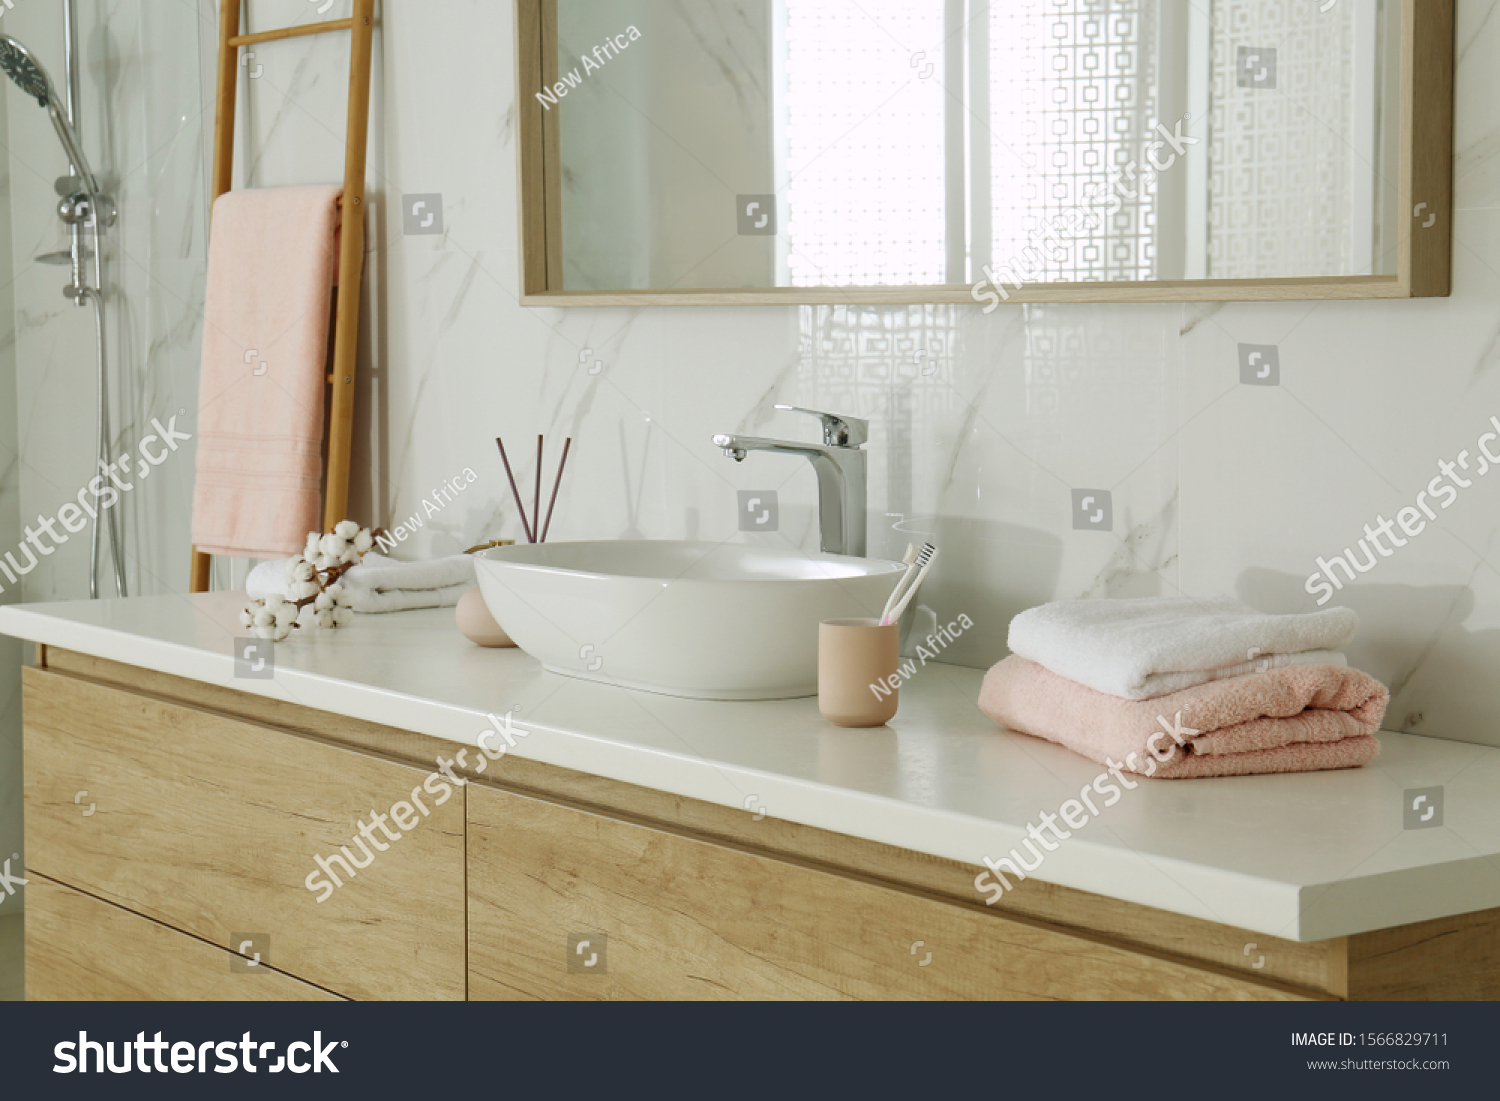 Large mirror over vessel sink in stylish bathroom interior #1566829711